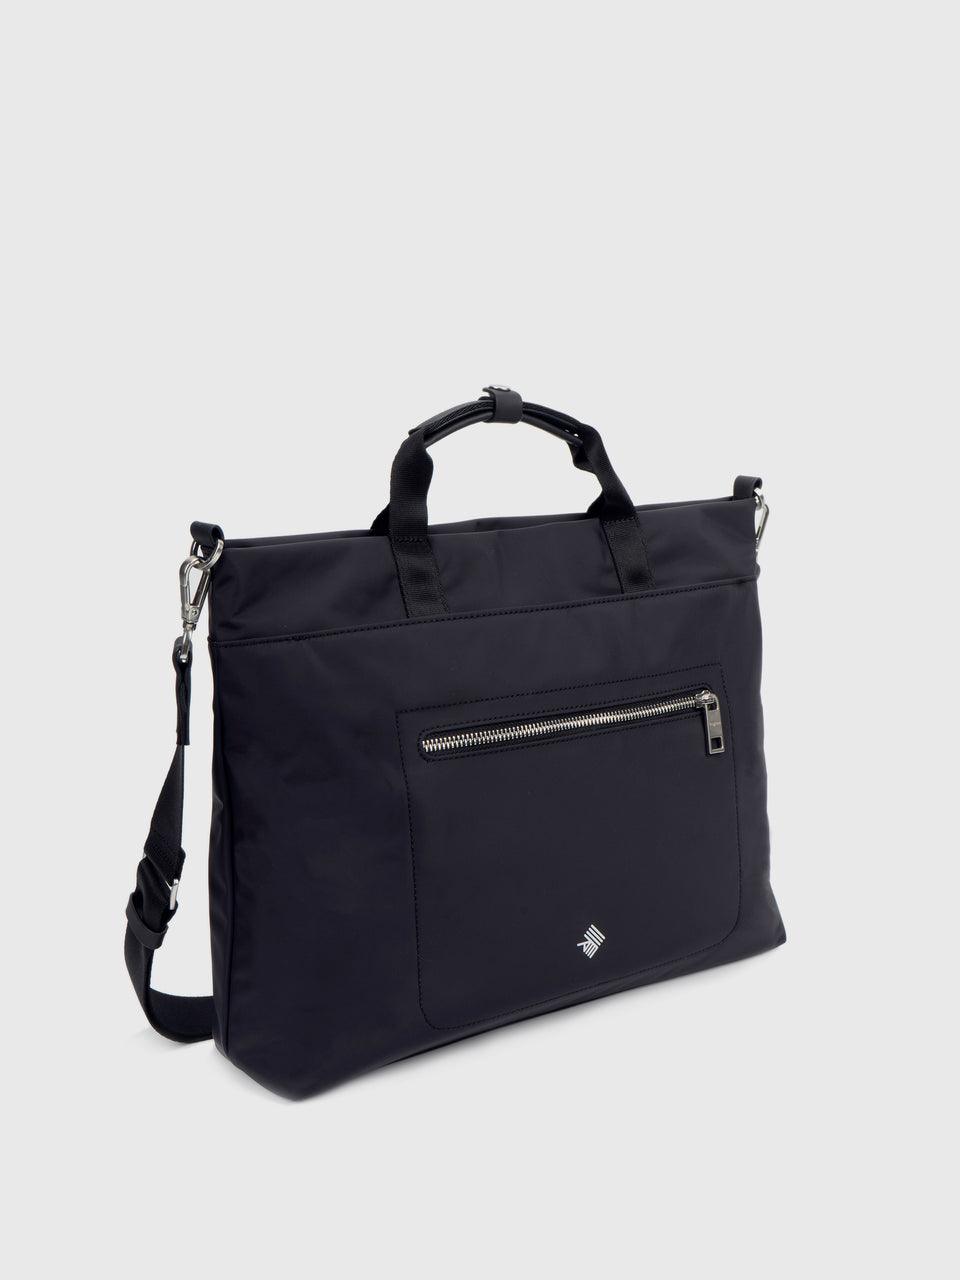 Office Bag - Charcoal Black